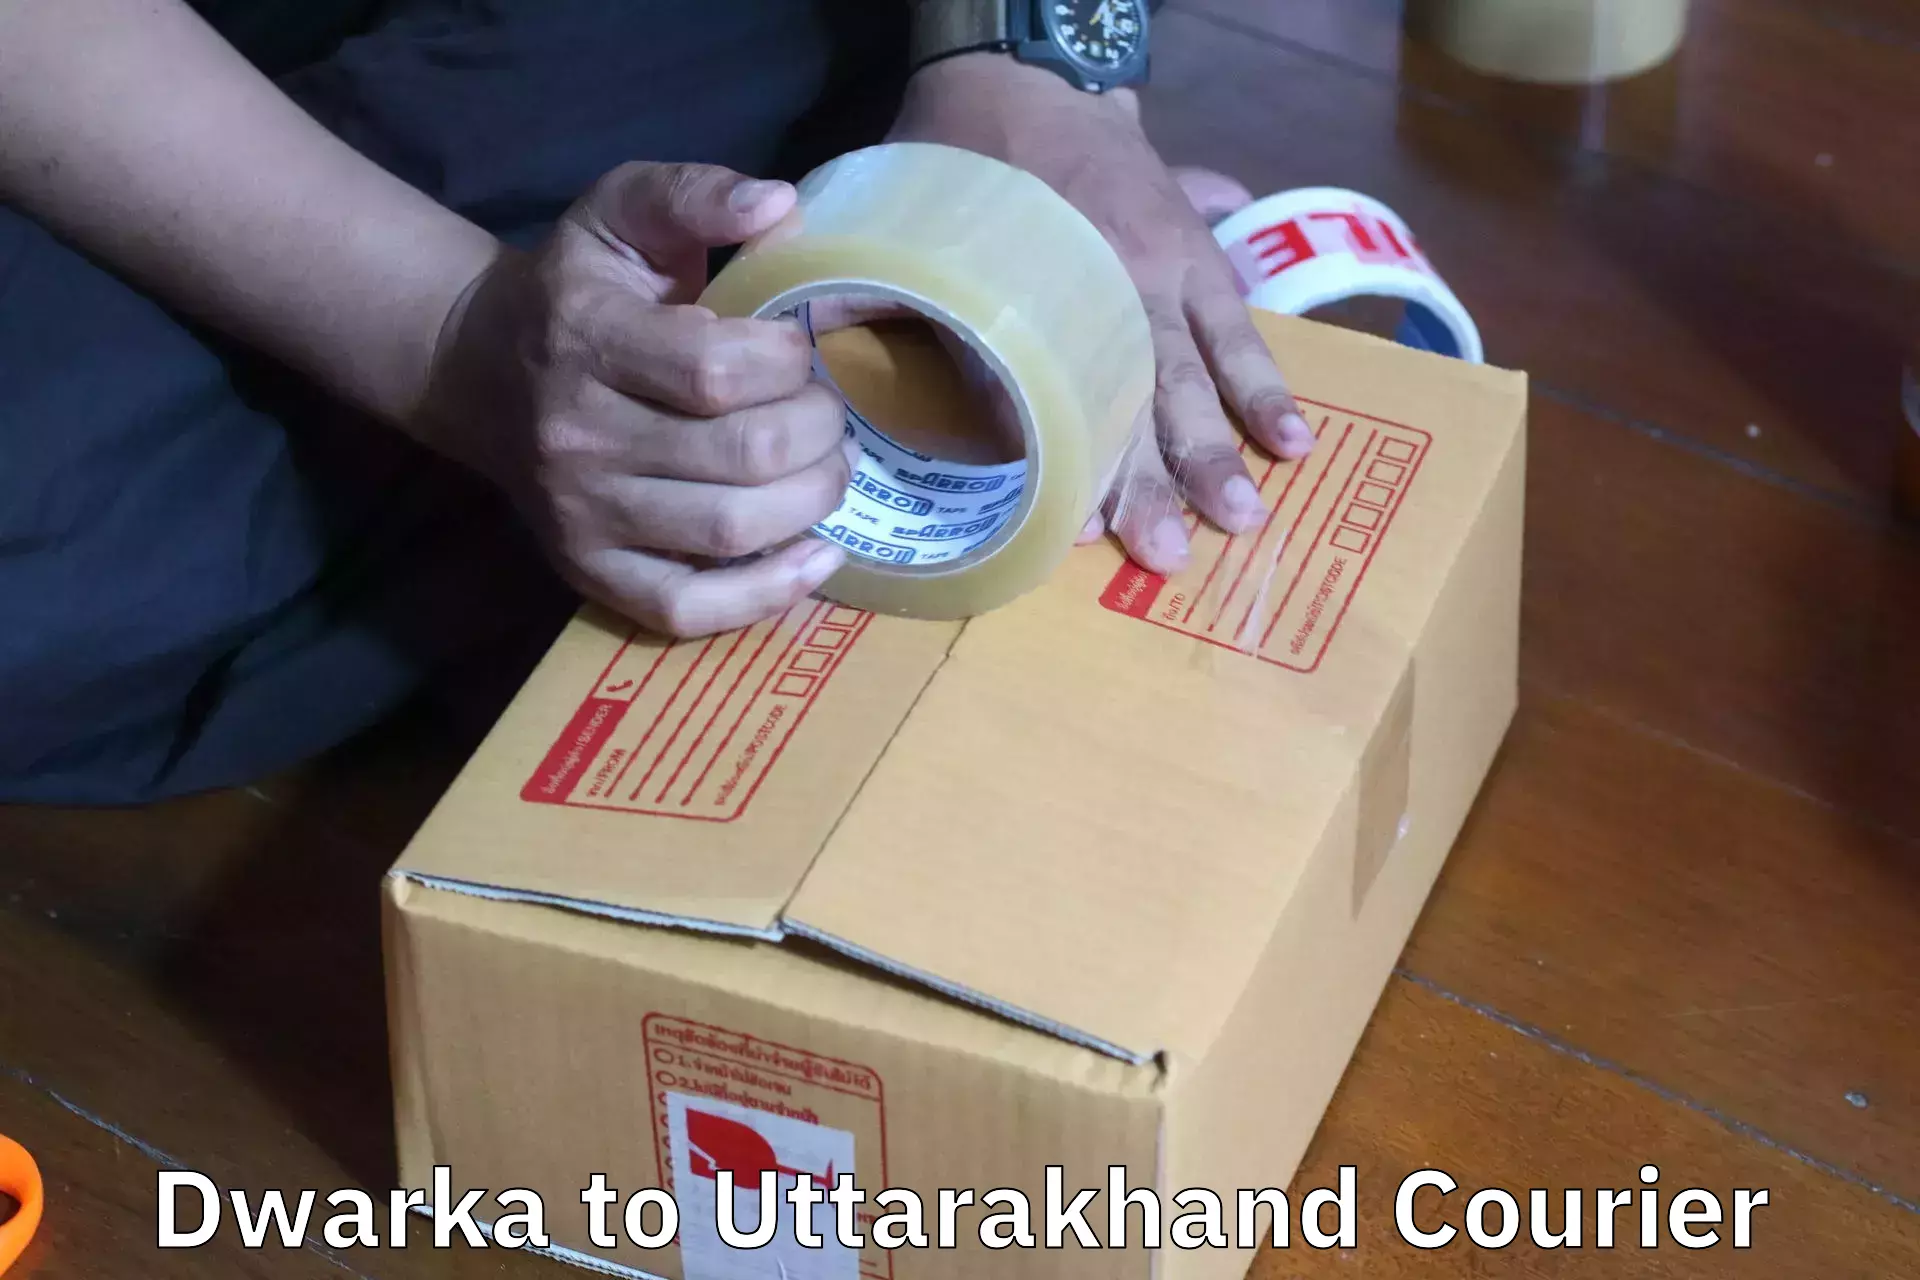 Trusted relocation experts Dwarka to Uttarakhand